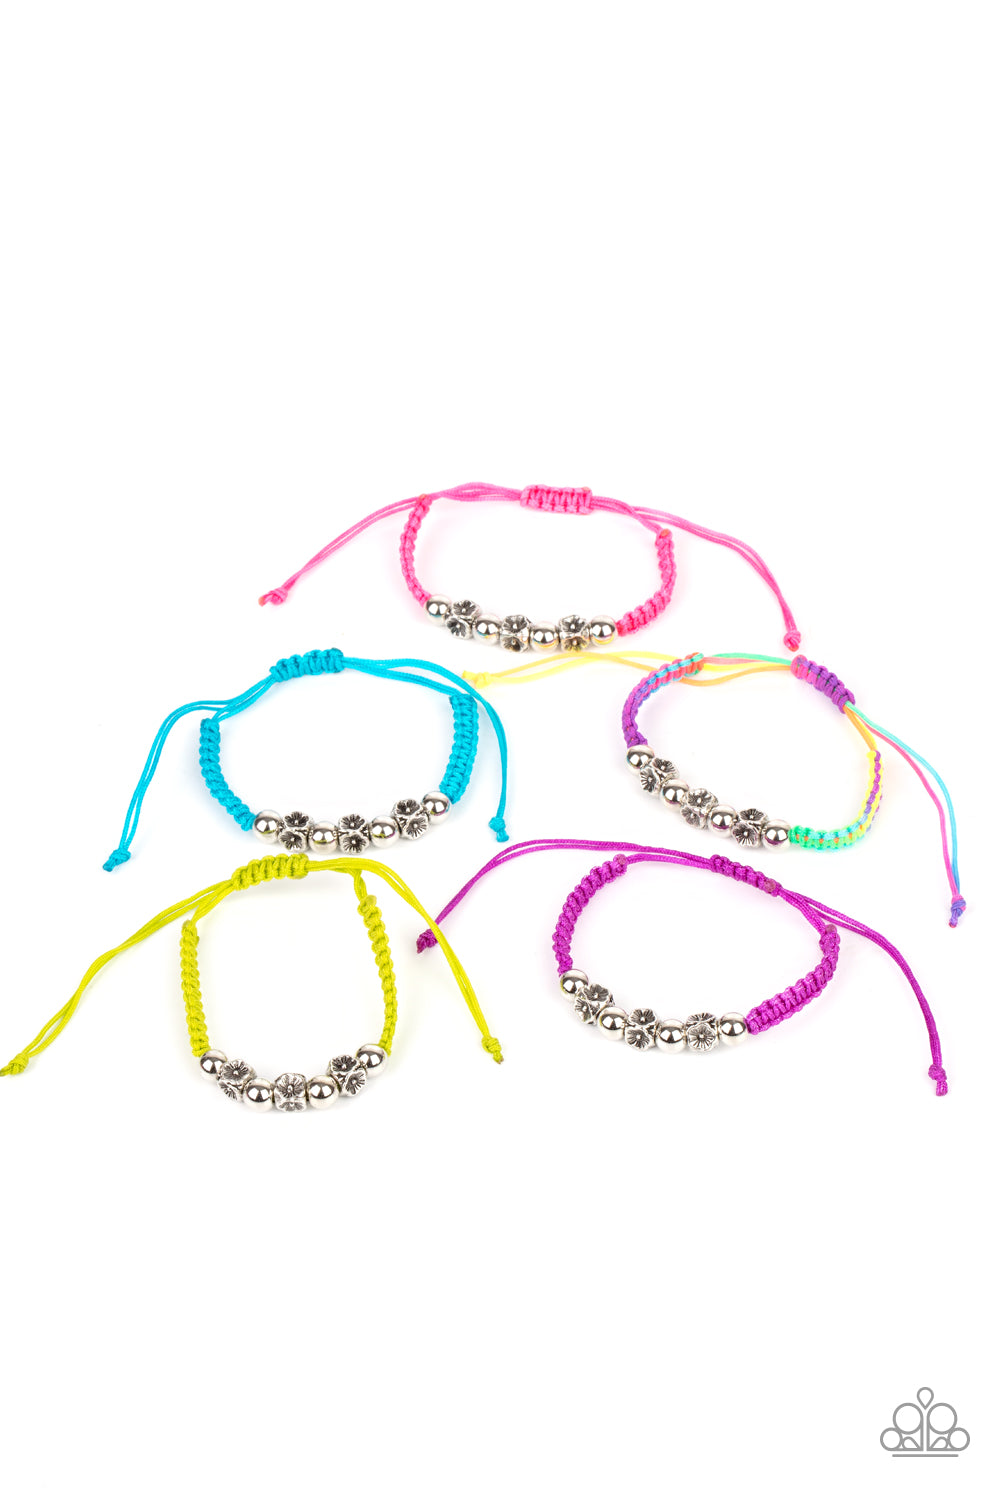 Starlet Shimmer Neon/Floral Bracelet Kit ♥ Starlet Shimmer Bracelets ♥ Paparazzi ♥